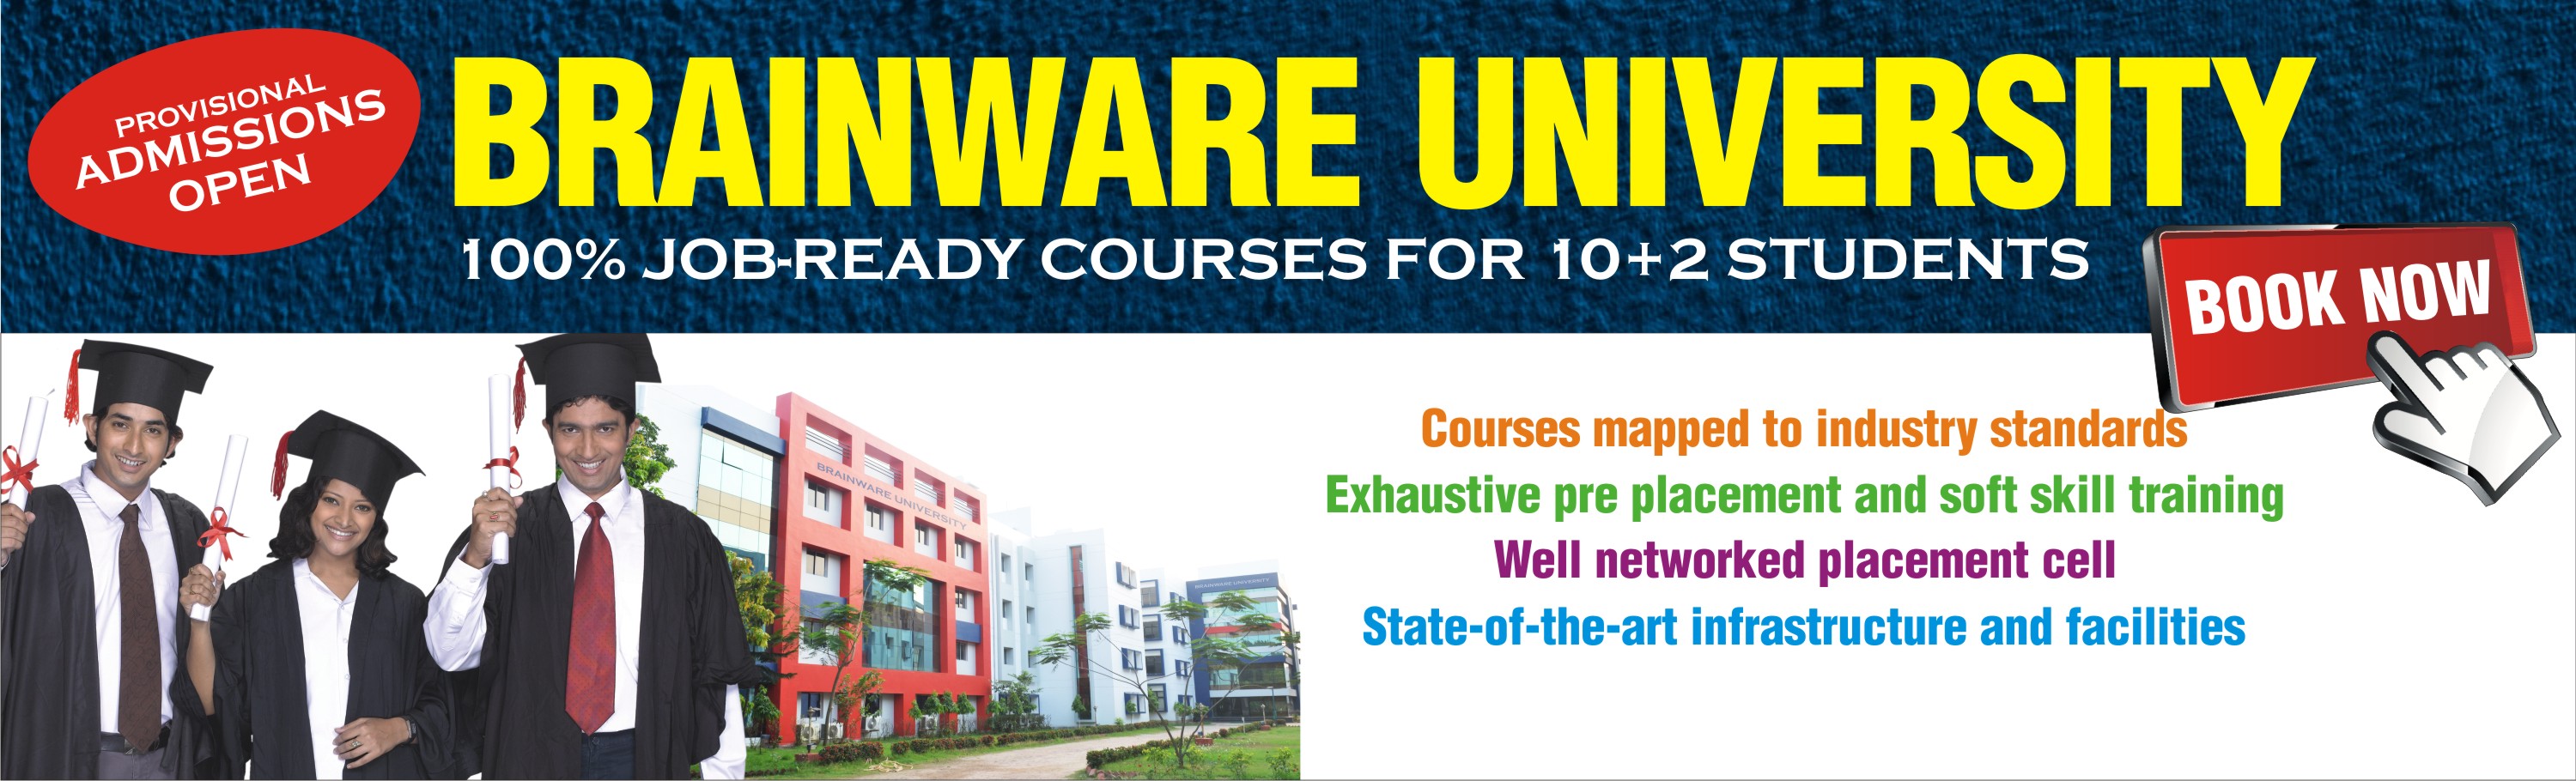 Universities of India : r/Urbanism